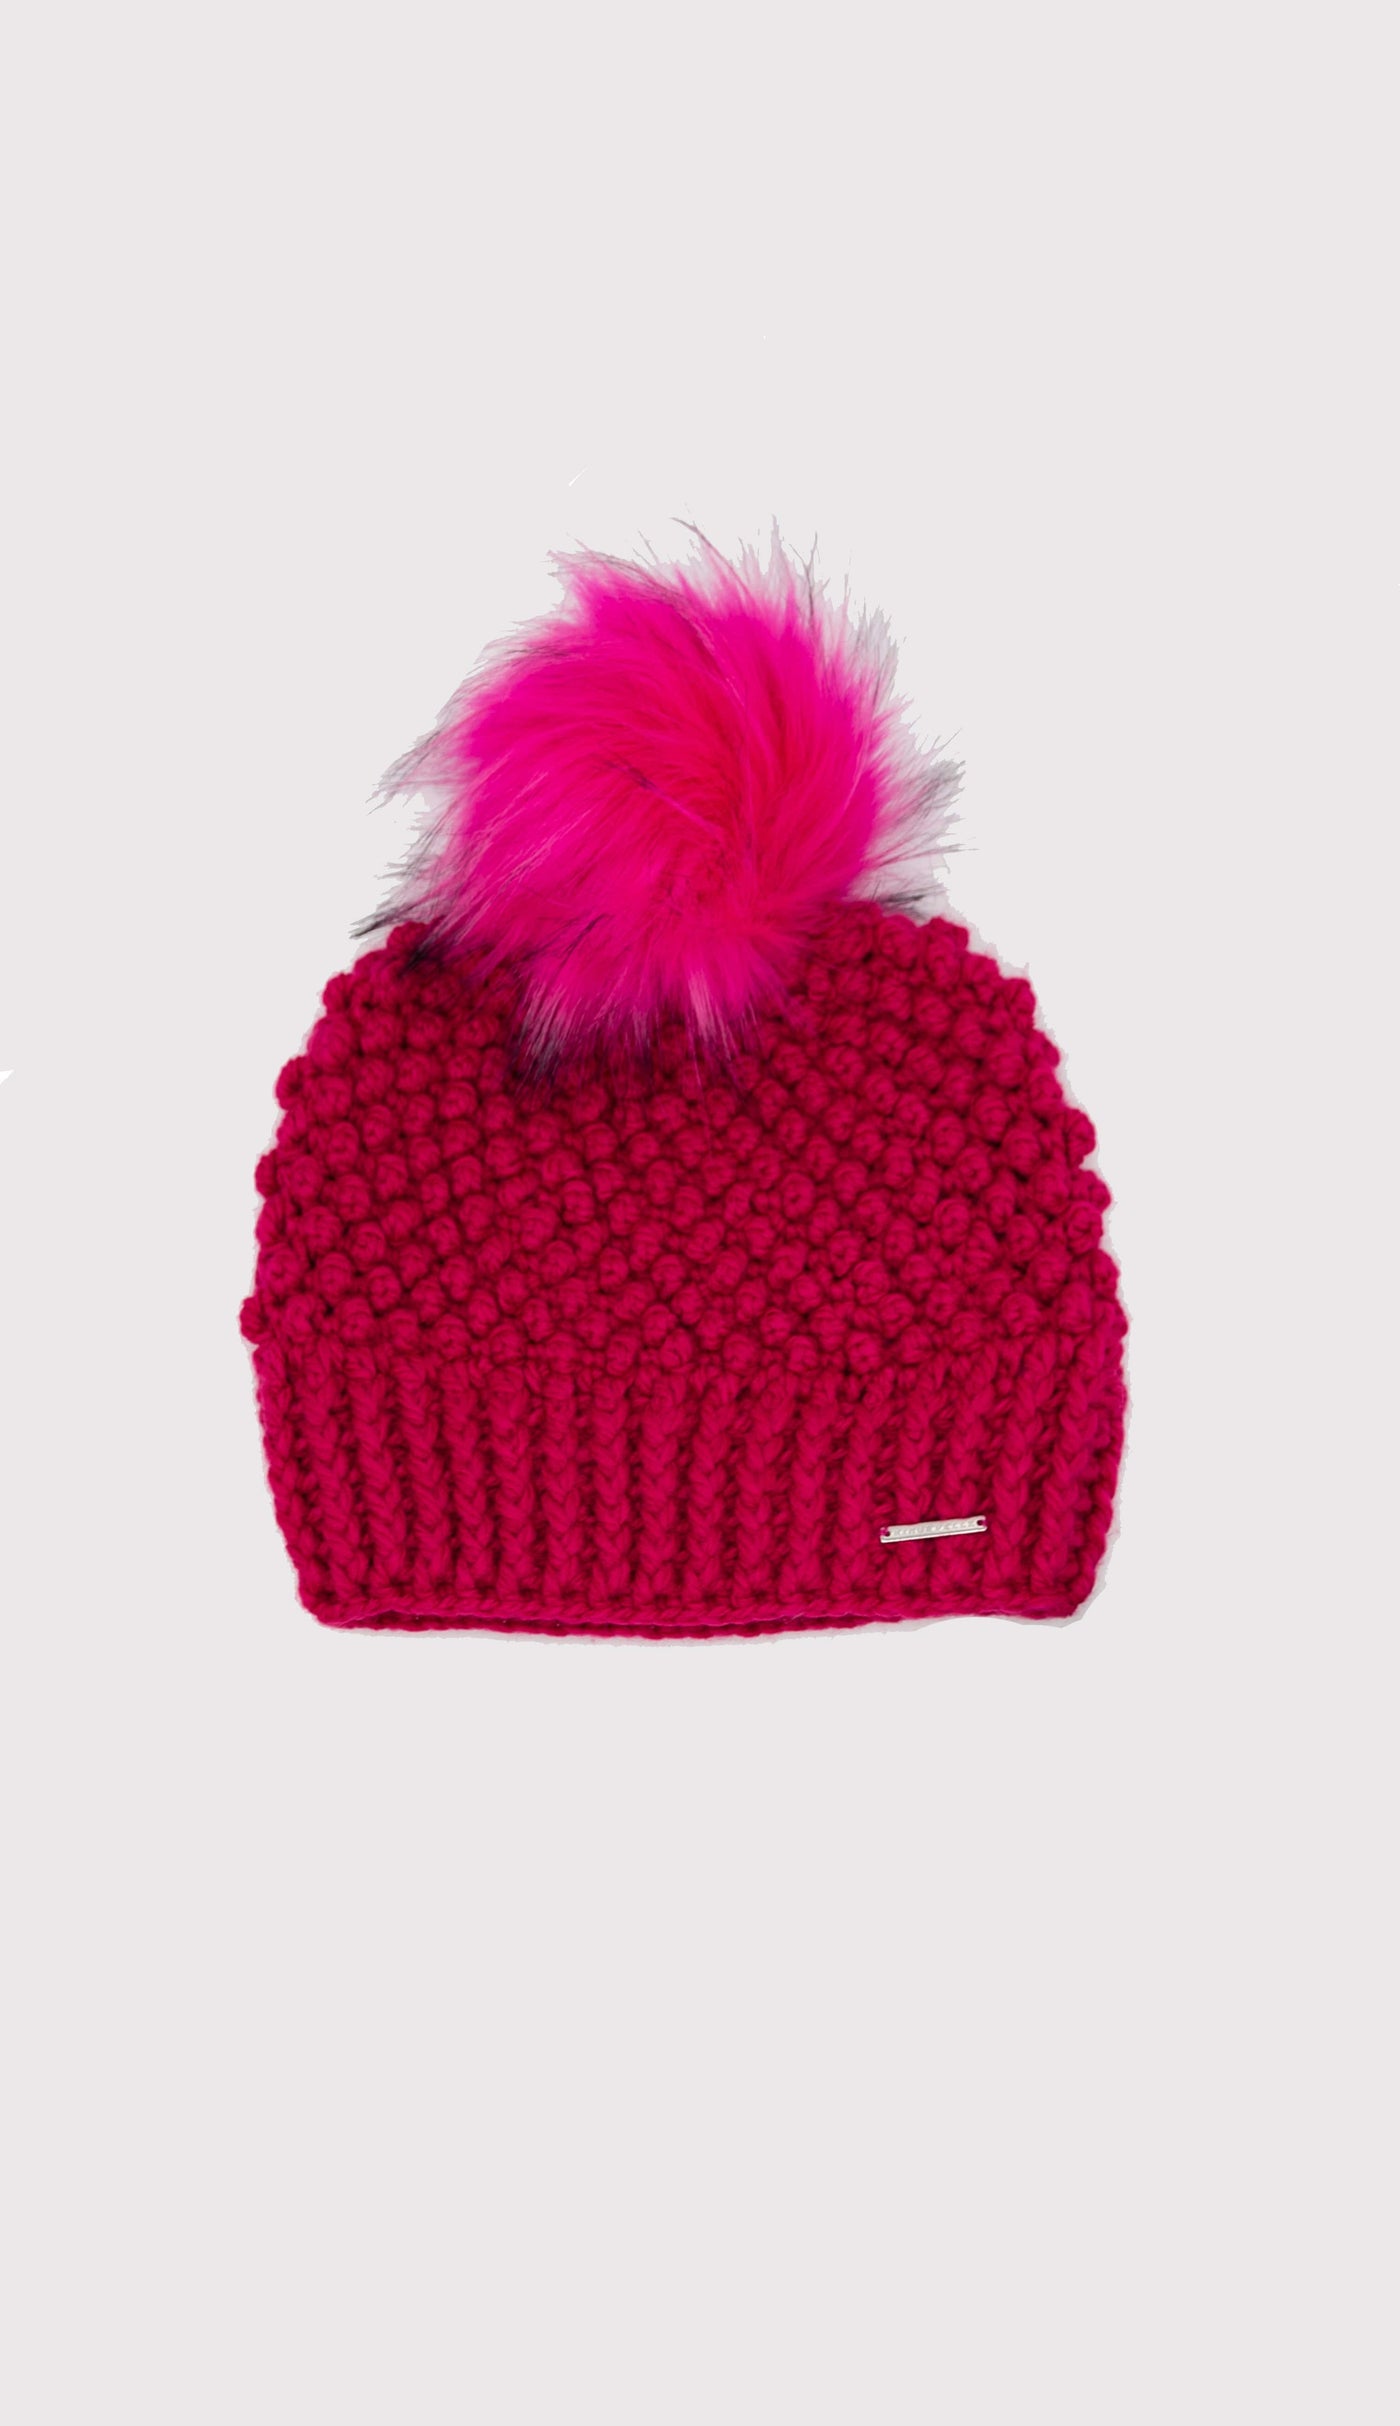 raspberry pink crochet hat - paula and chlo